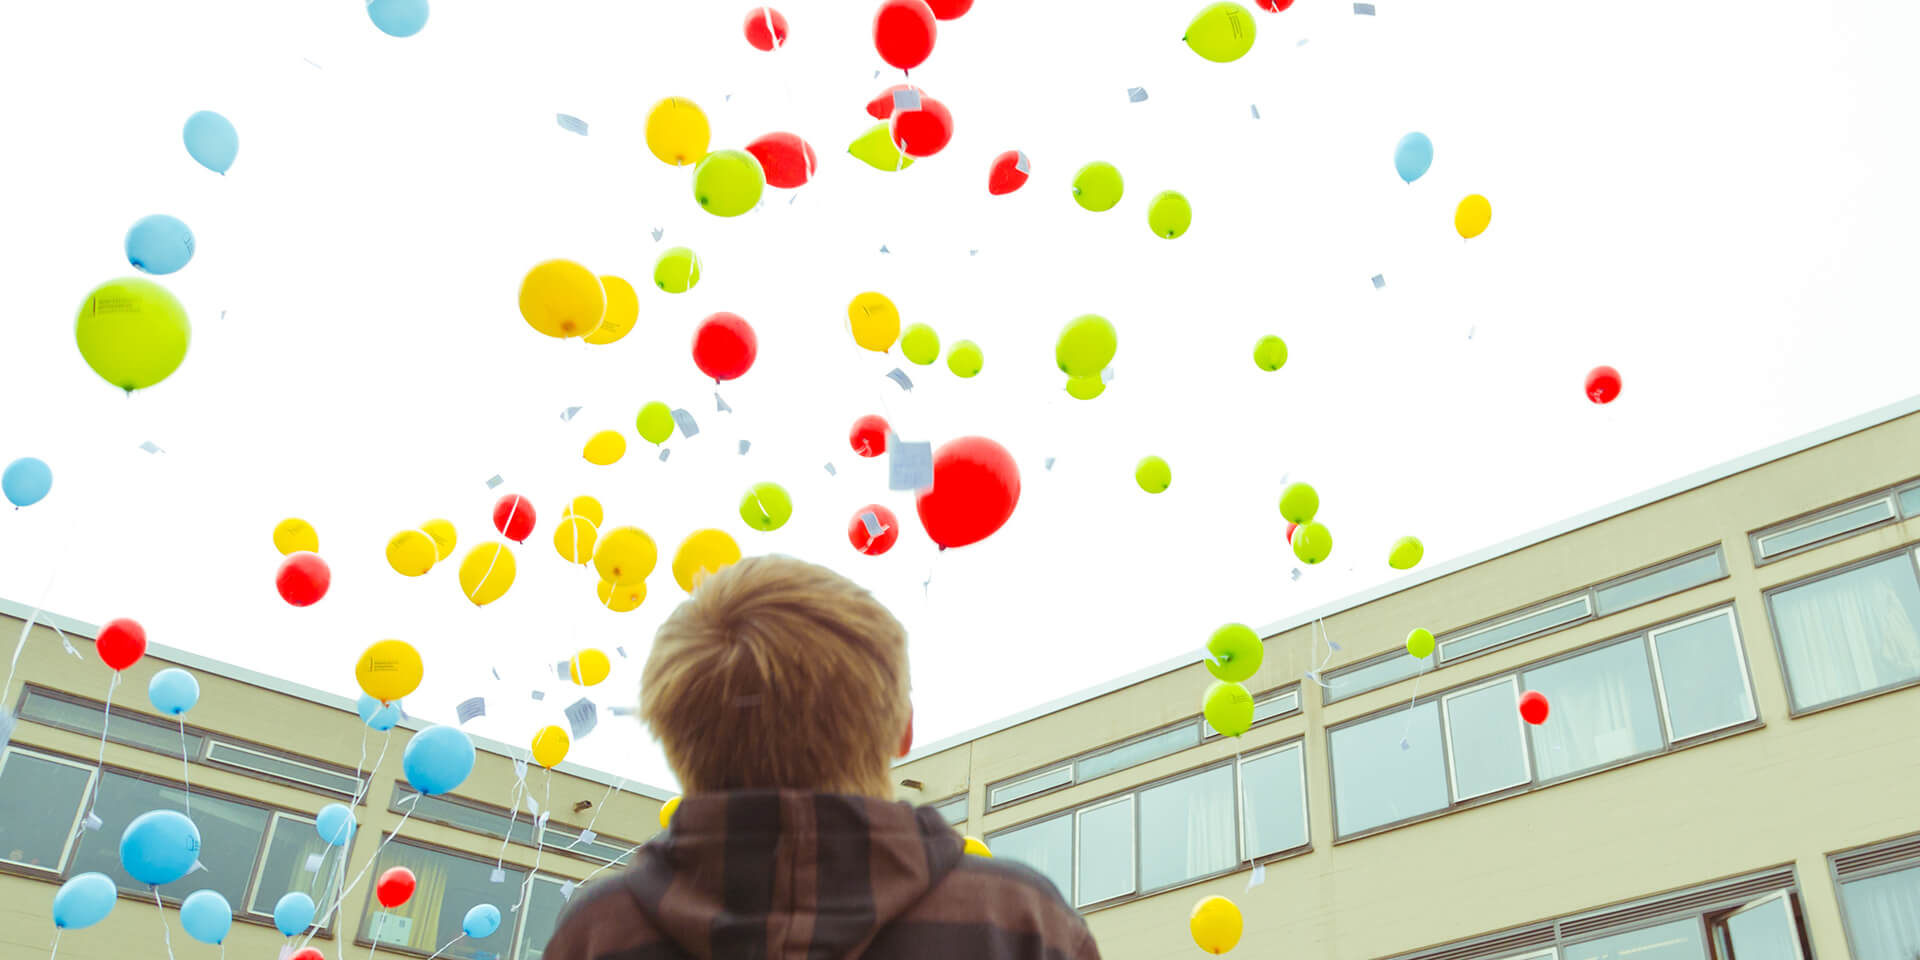 Ein Junge blickt in den Himmel voller Luftballons